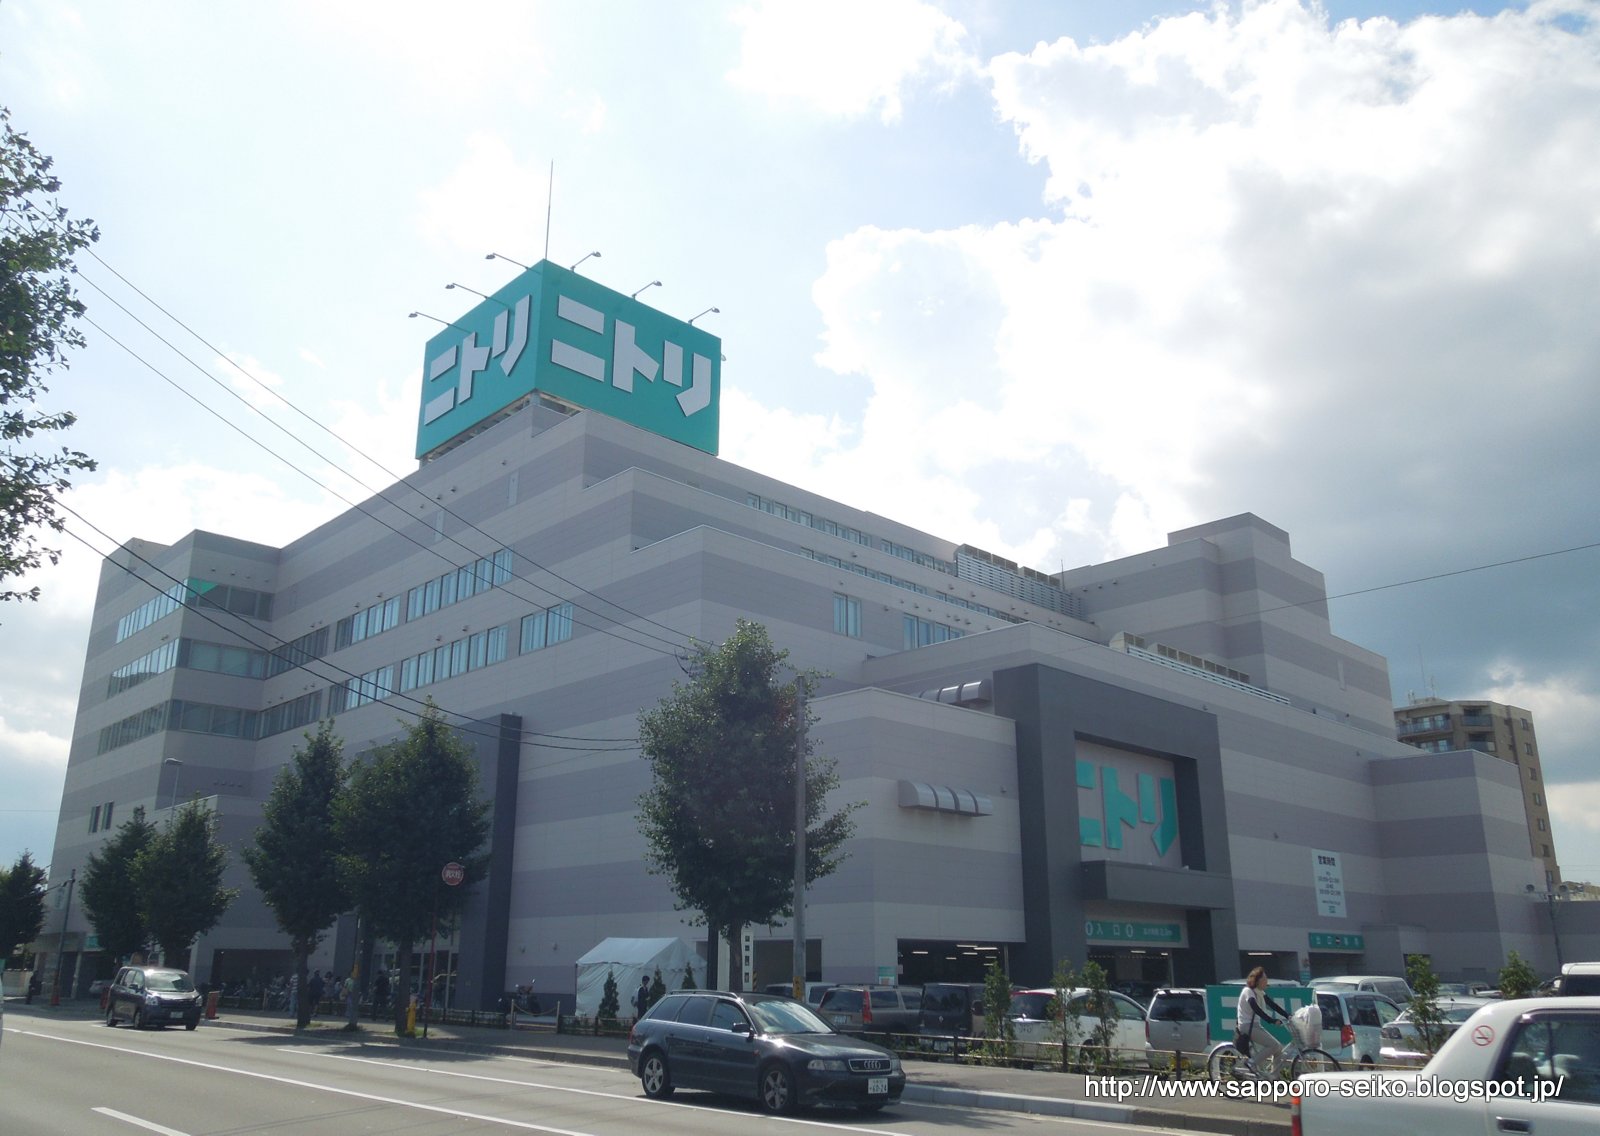 Home center. 446m to Nitori Aso store (hardware store)